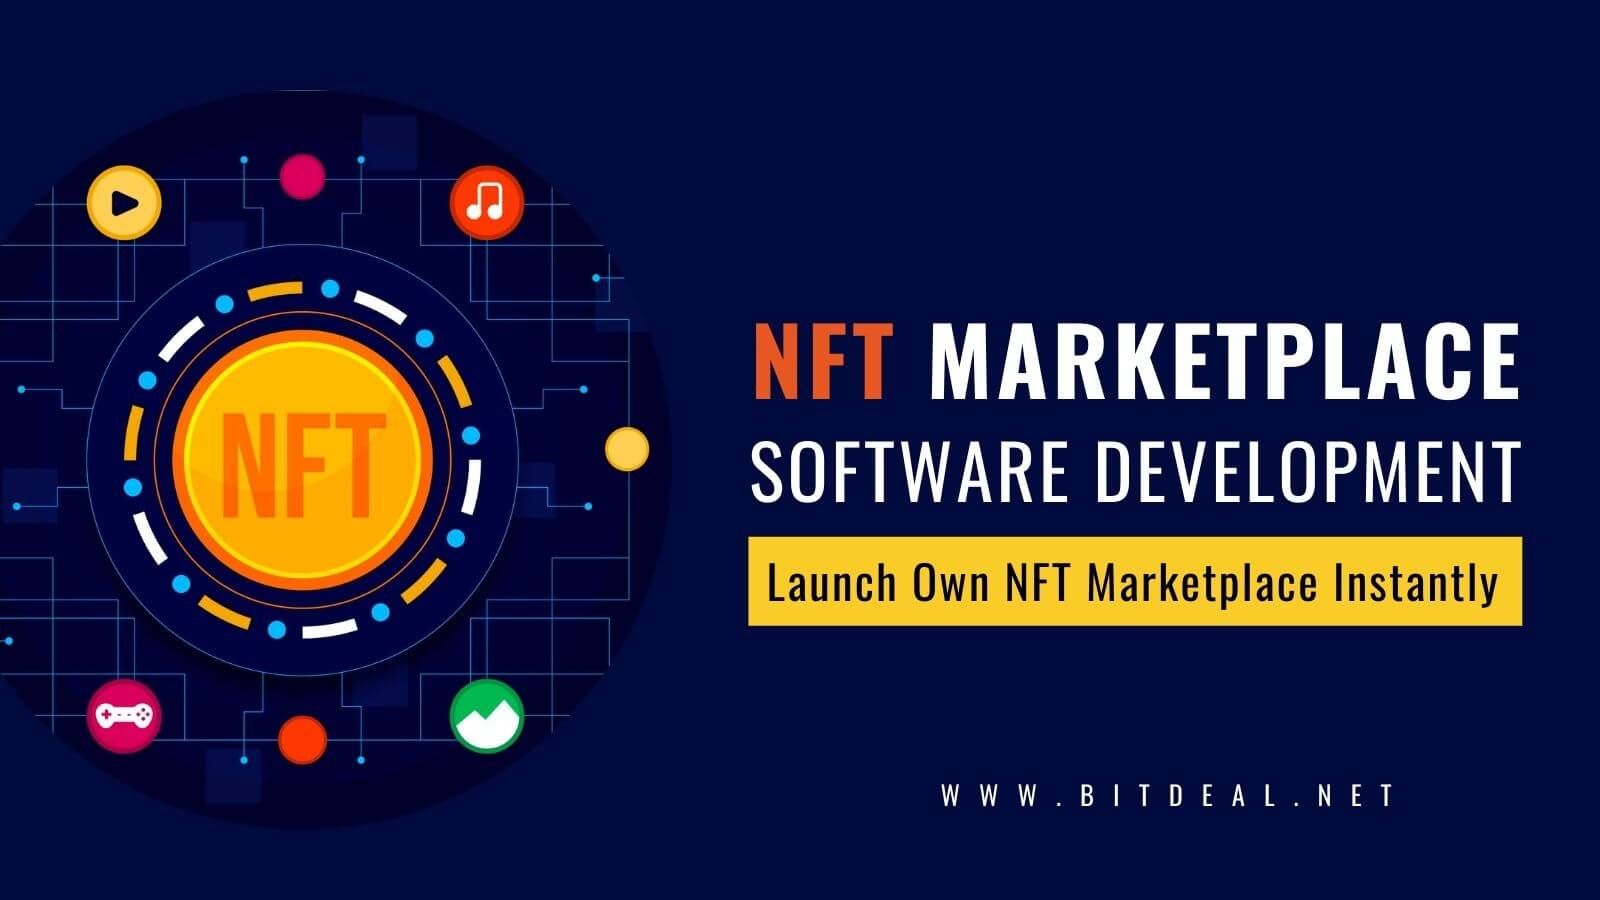 White Label NFT Marketplace Software